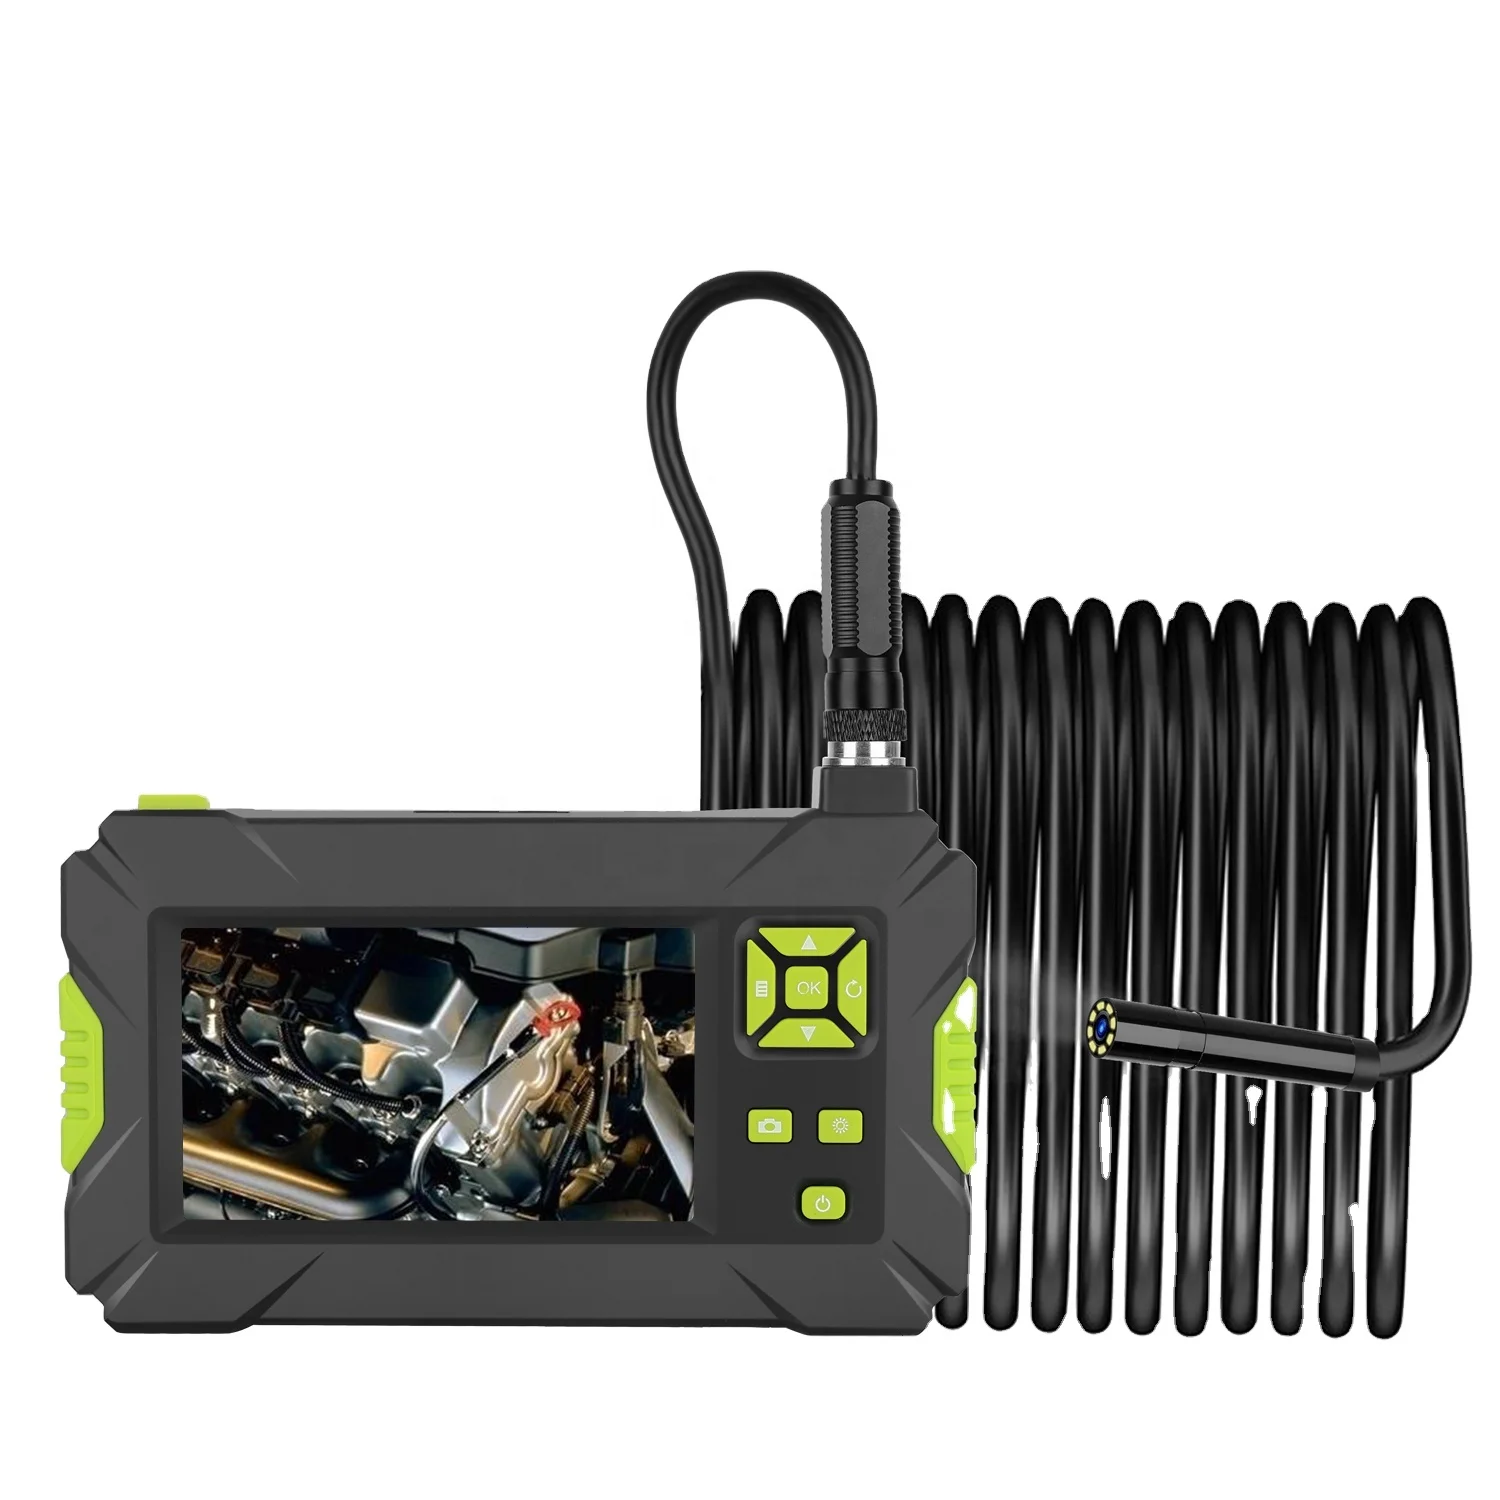 Industrial Borescope 3.5M Endoscope Inspection Snake Camera 4.3'' HD Screen US 